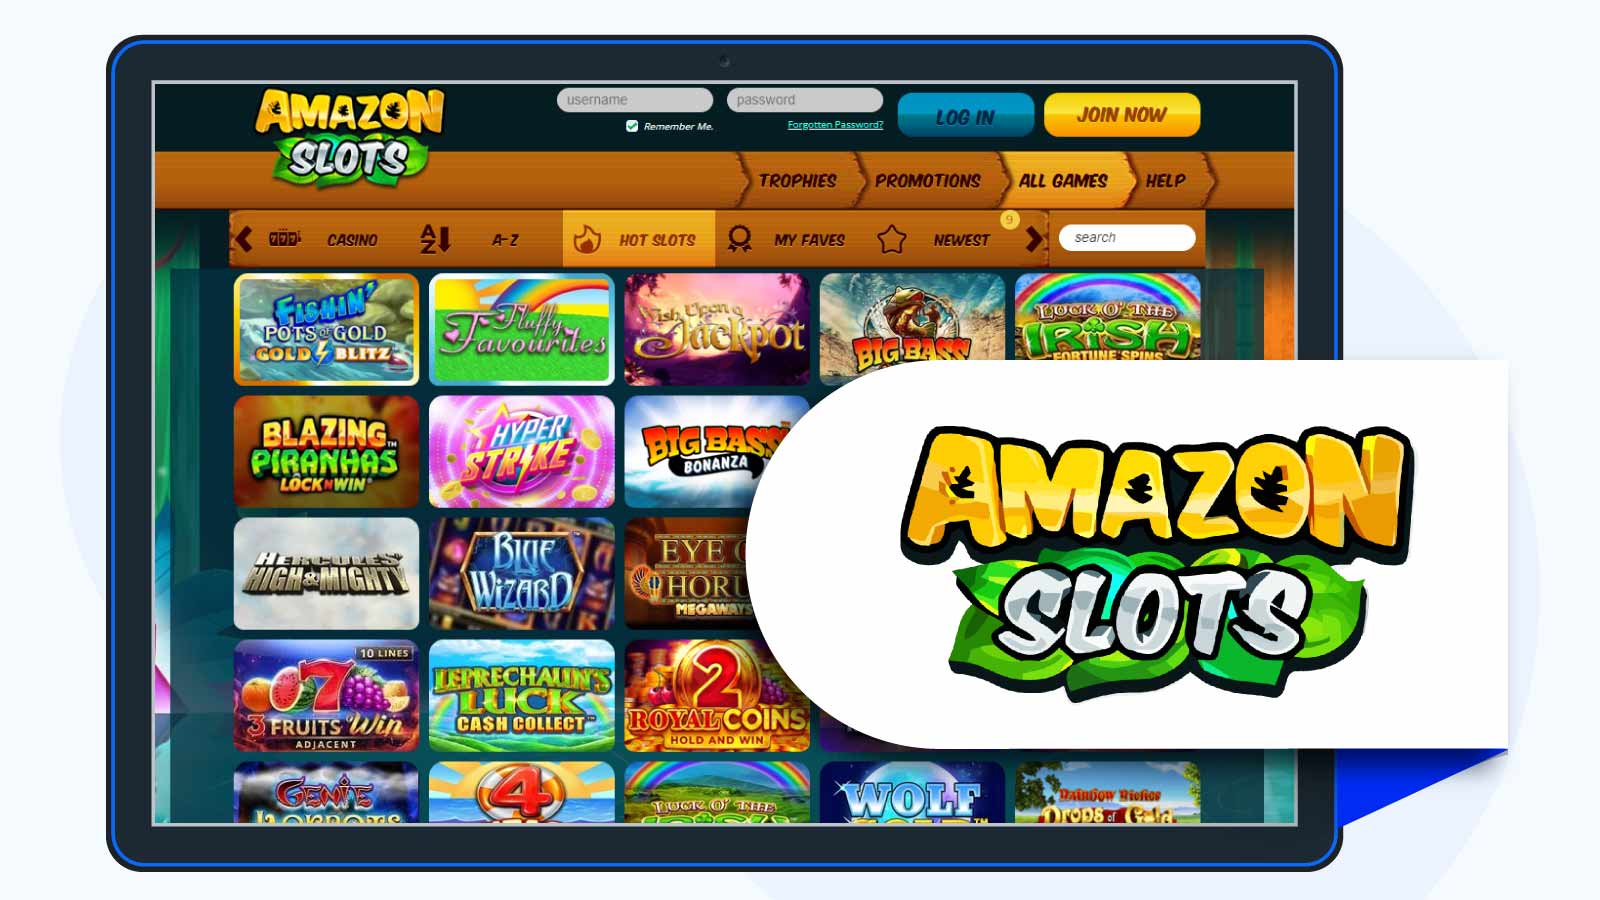 Amazon Slots 5$ deposit casino